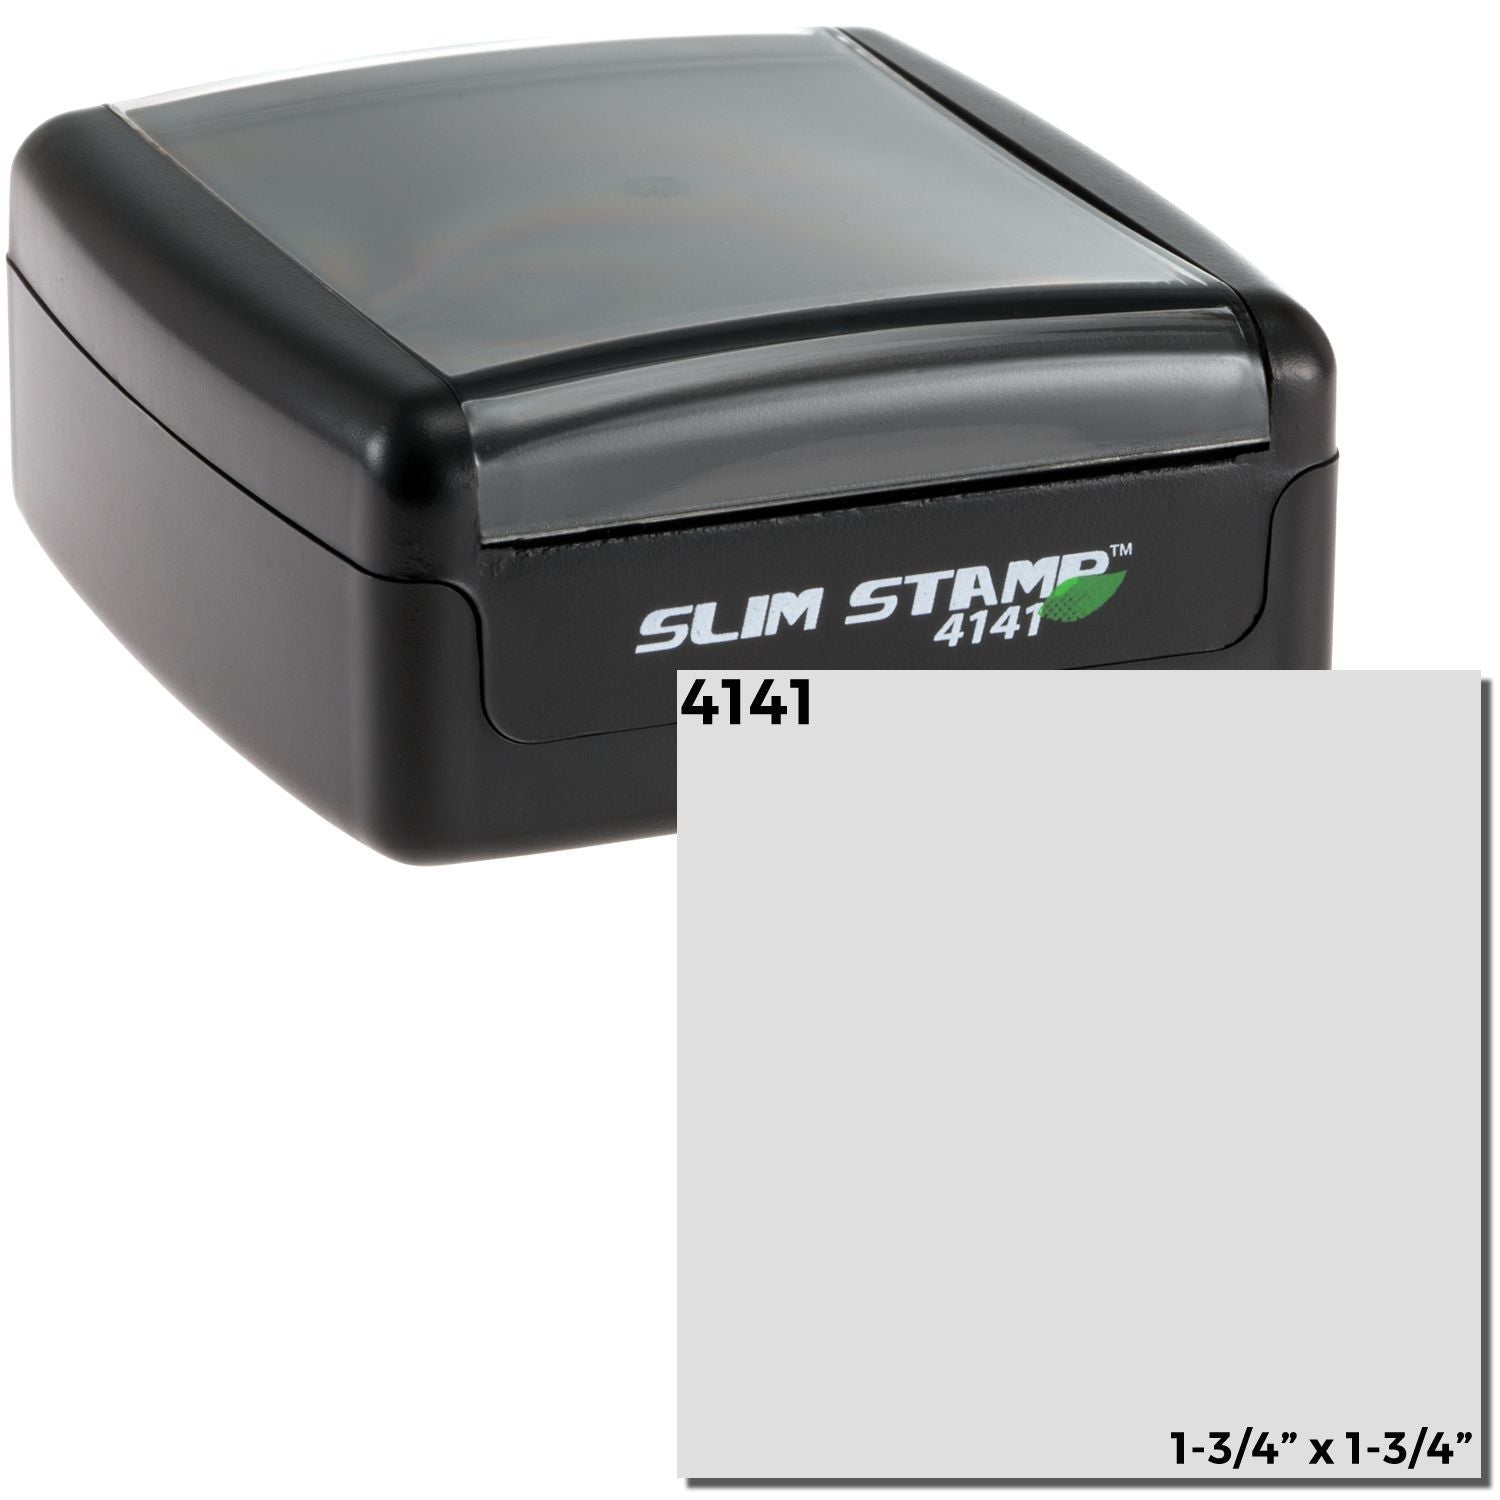 Slim Stamp 4141 Pre Inked Stamp 1 5 8 X 1 5 8 Main Image